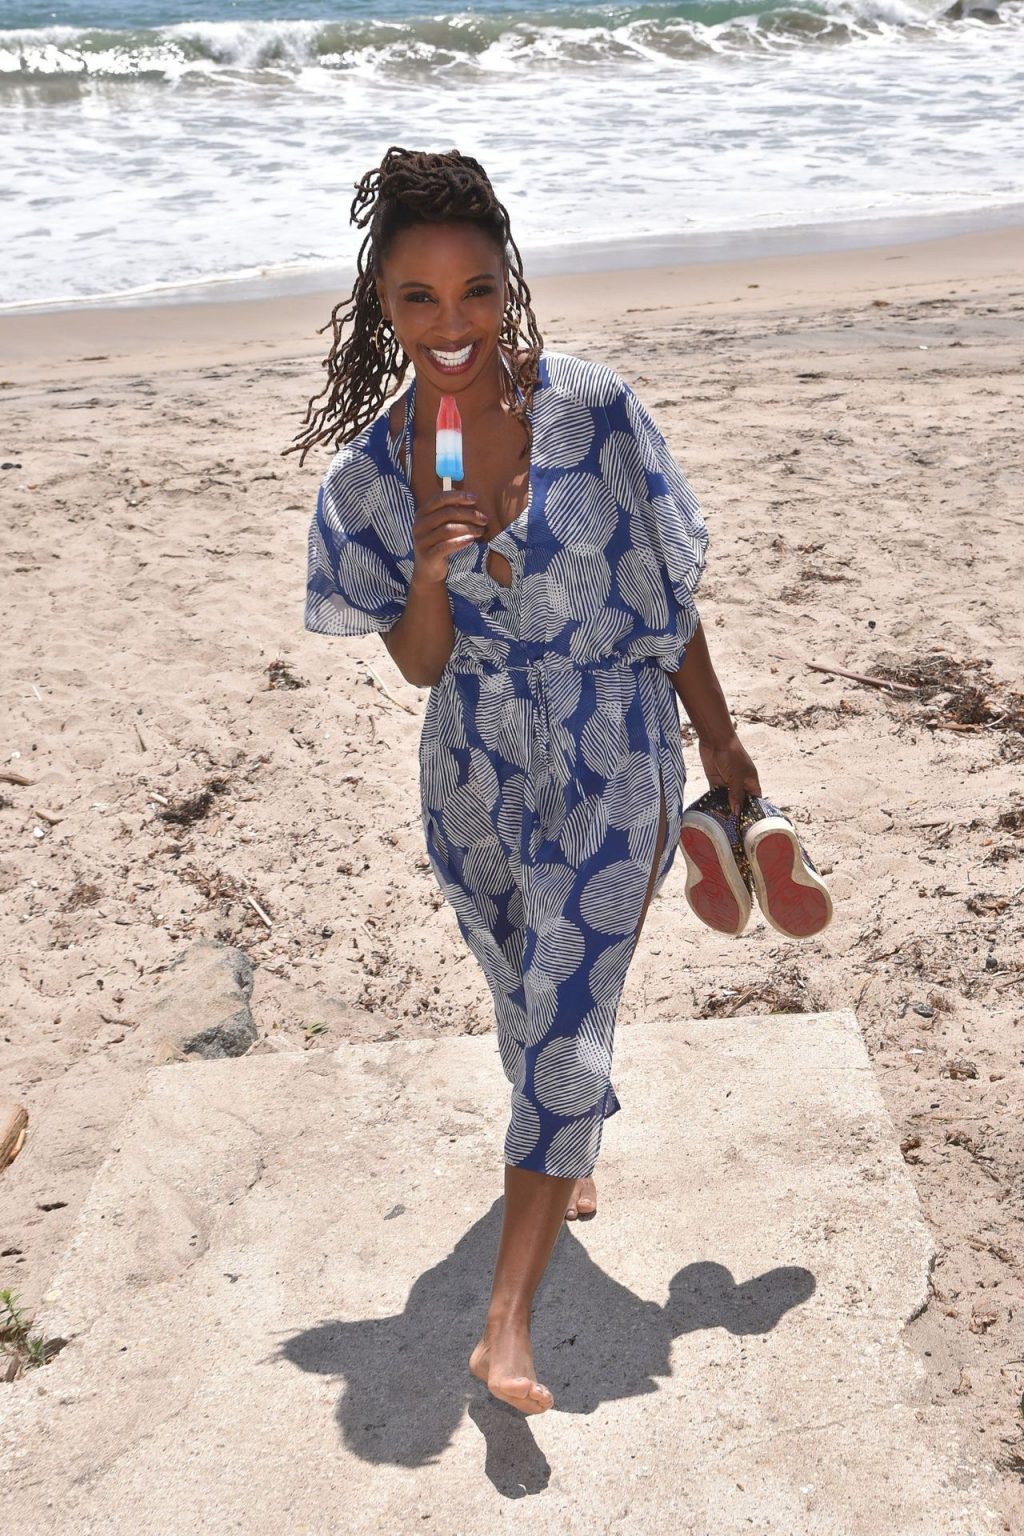 Shanola Hampton Poses in a Bikini on the Beach in Malibu (12 Photos)